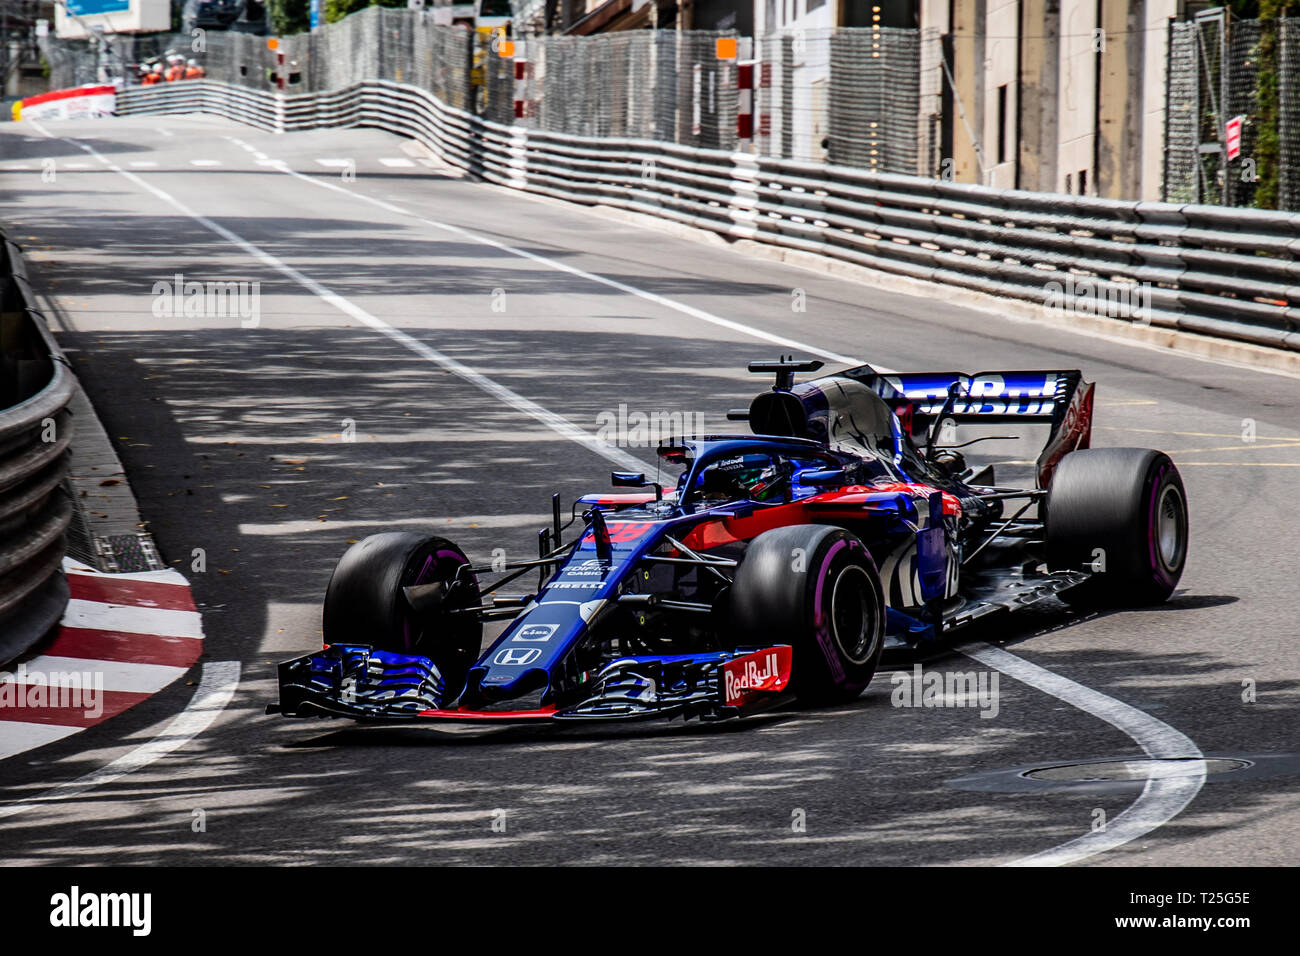 Monte Carlo/Monaco - 05/24/2018 - #28 Brendon Hartley (NZL) in his Toro Rosso Honda STR13 during free practice ahead of the 2018 Monaco Grand Prix Stock Photo